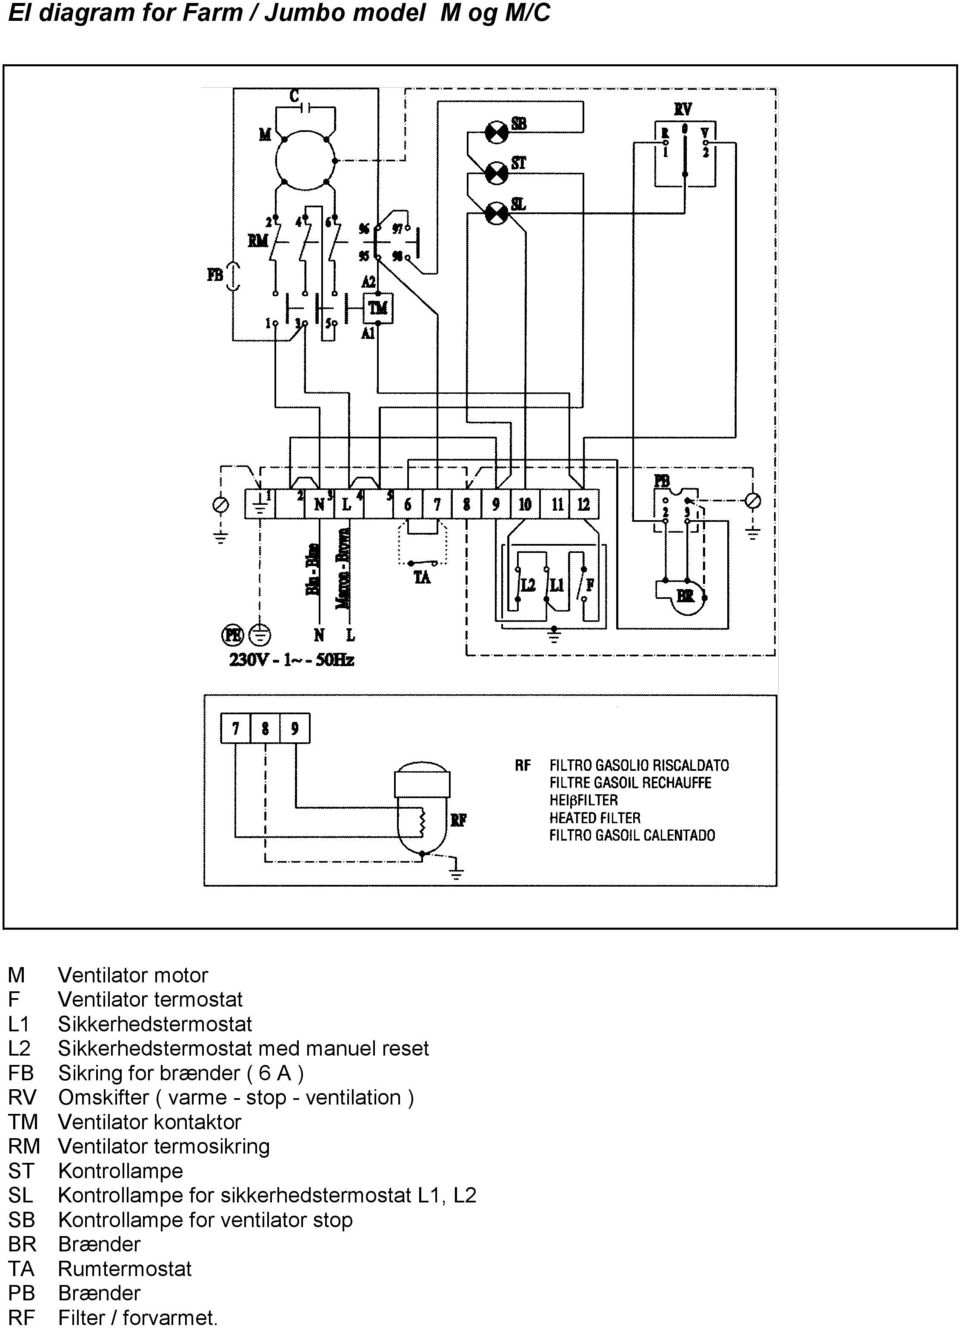 ventilation ) TM Ventilator kontaktor RM Ventilator termosikring ST Kontrollampe SL Kontrollampe for